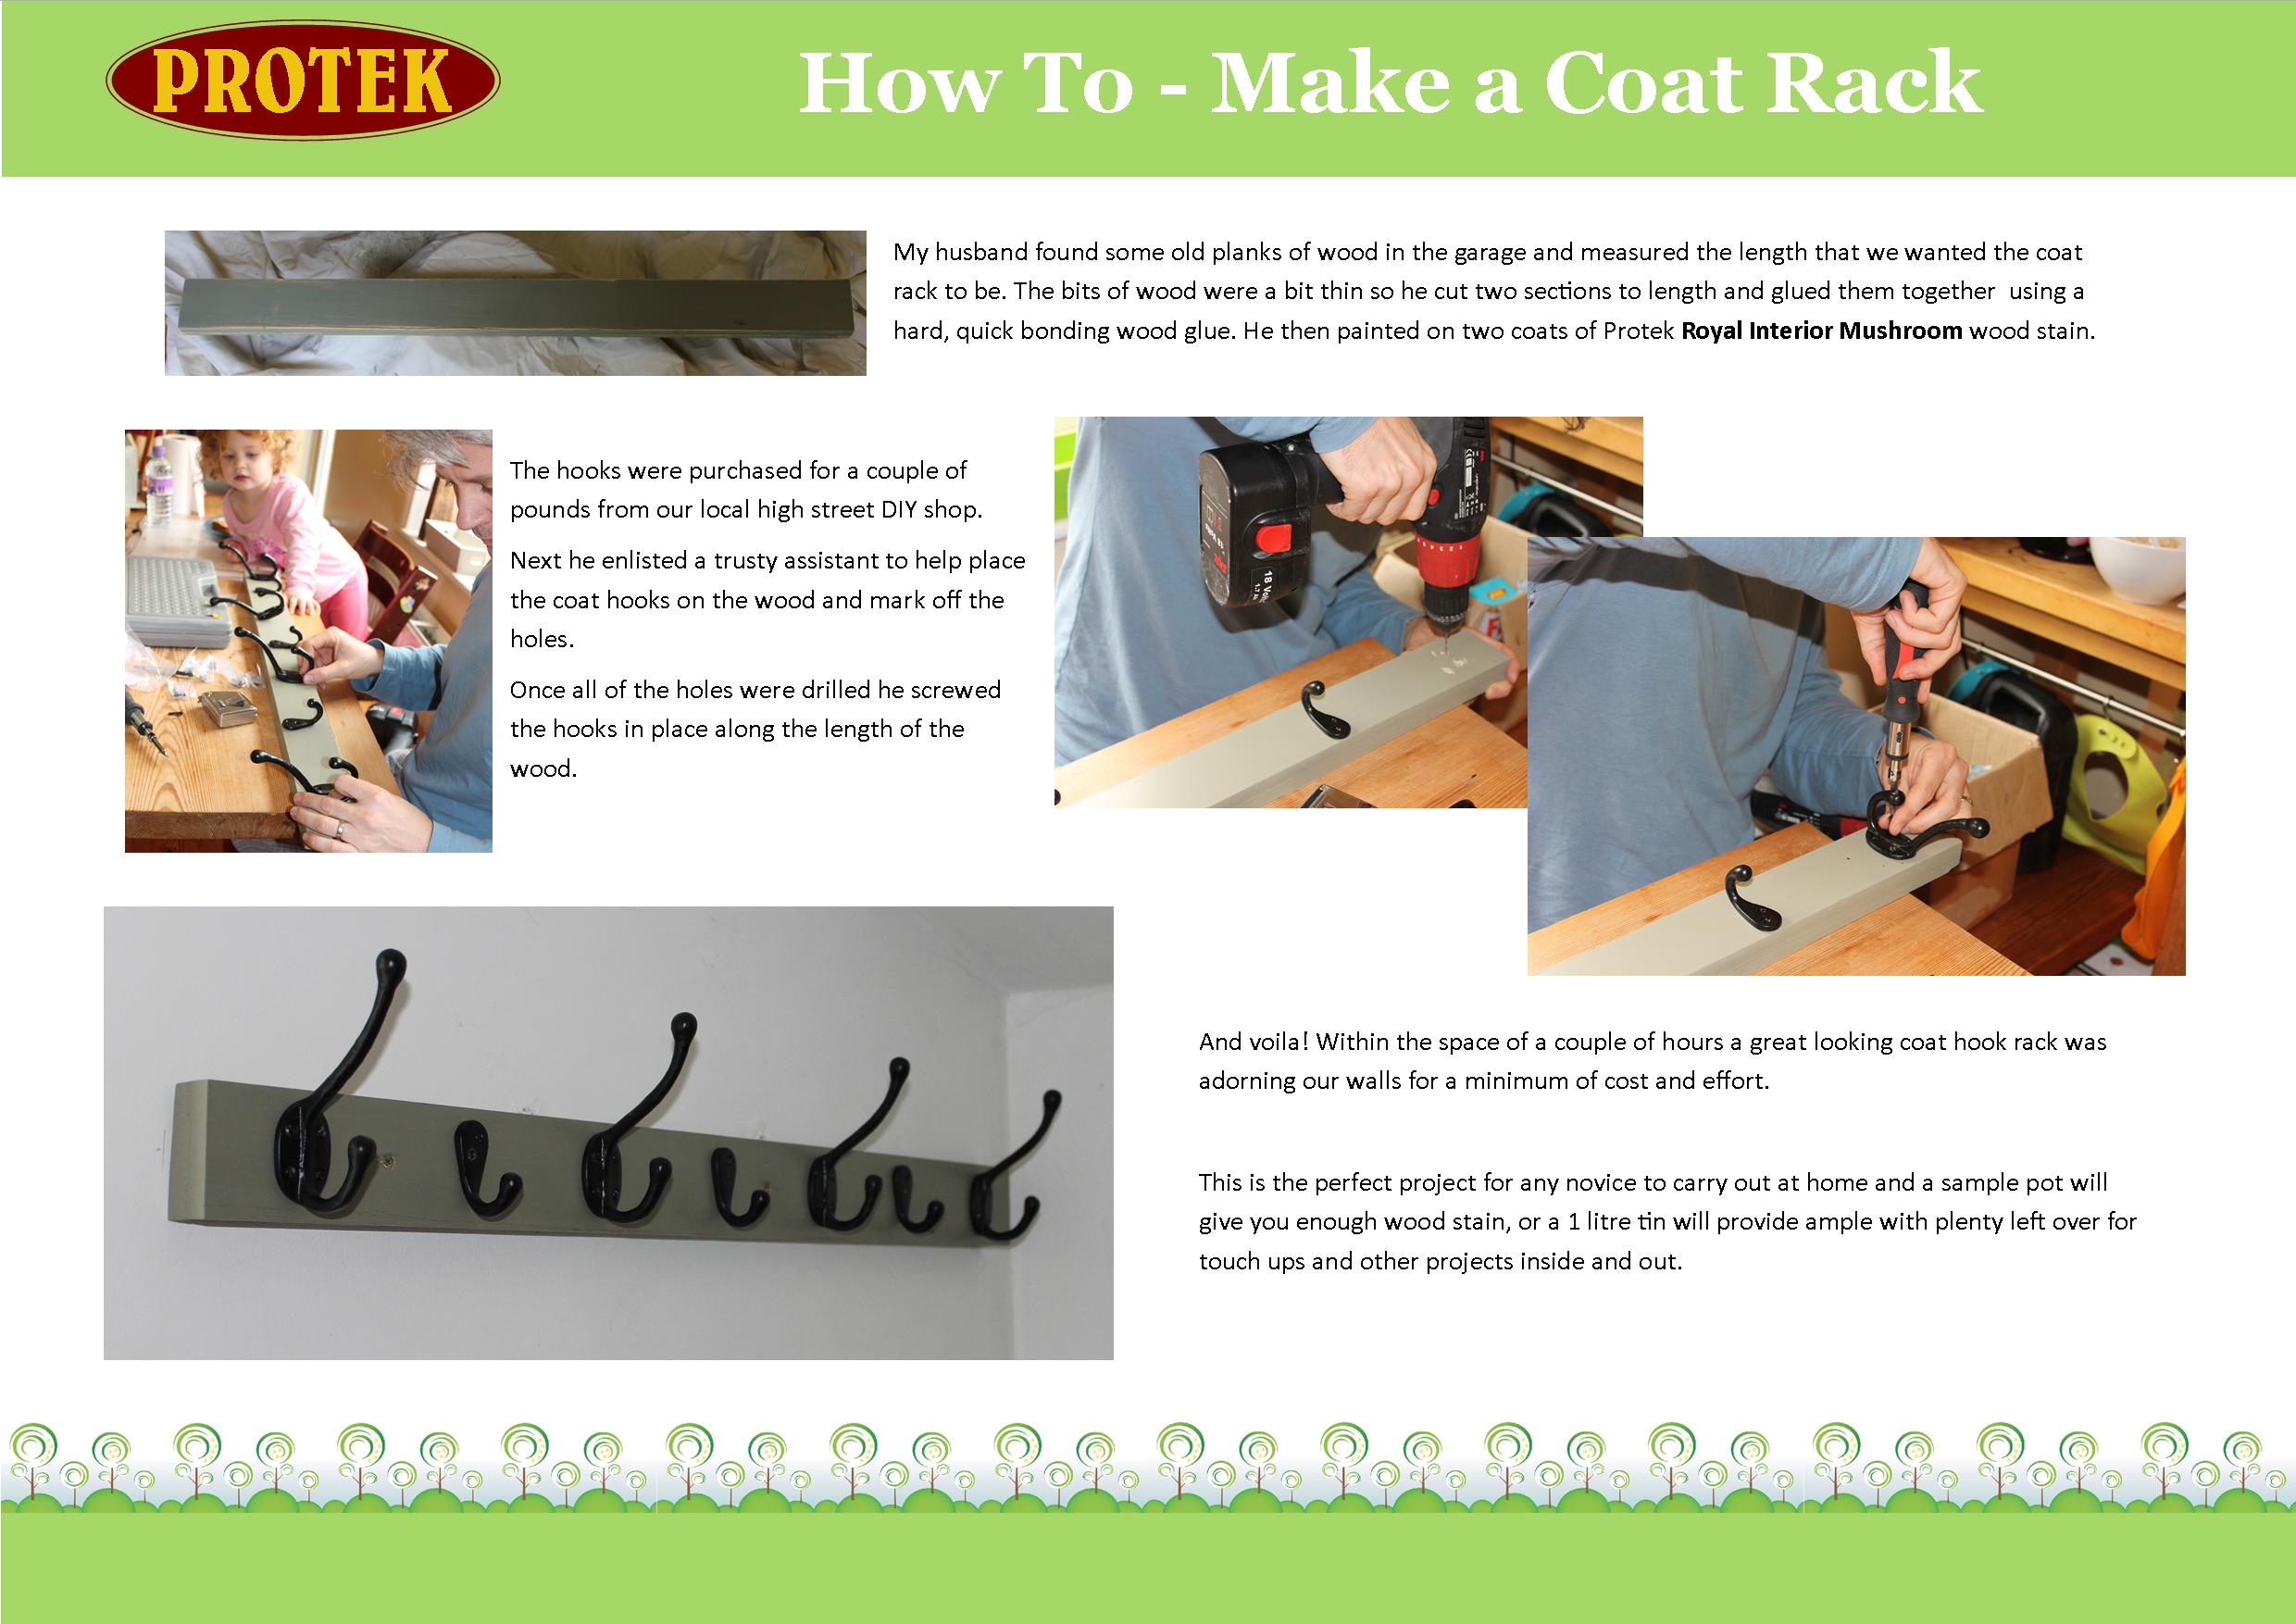 How To Make a Coat Rack